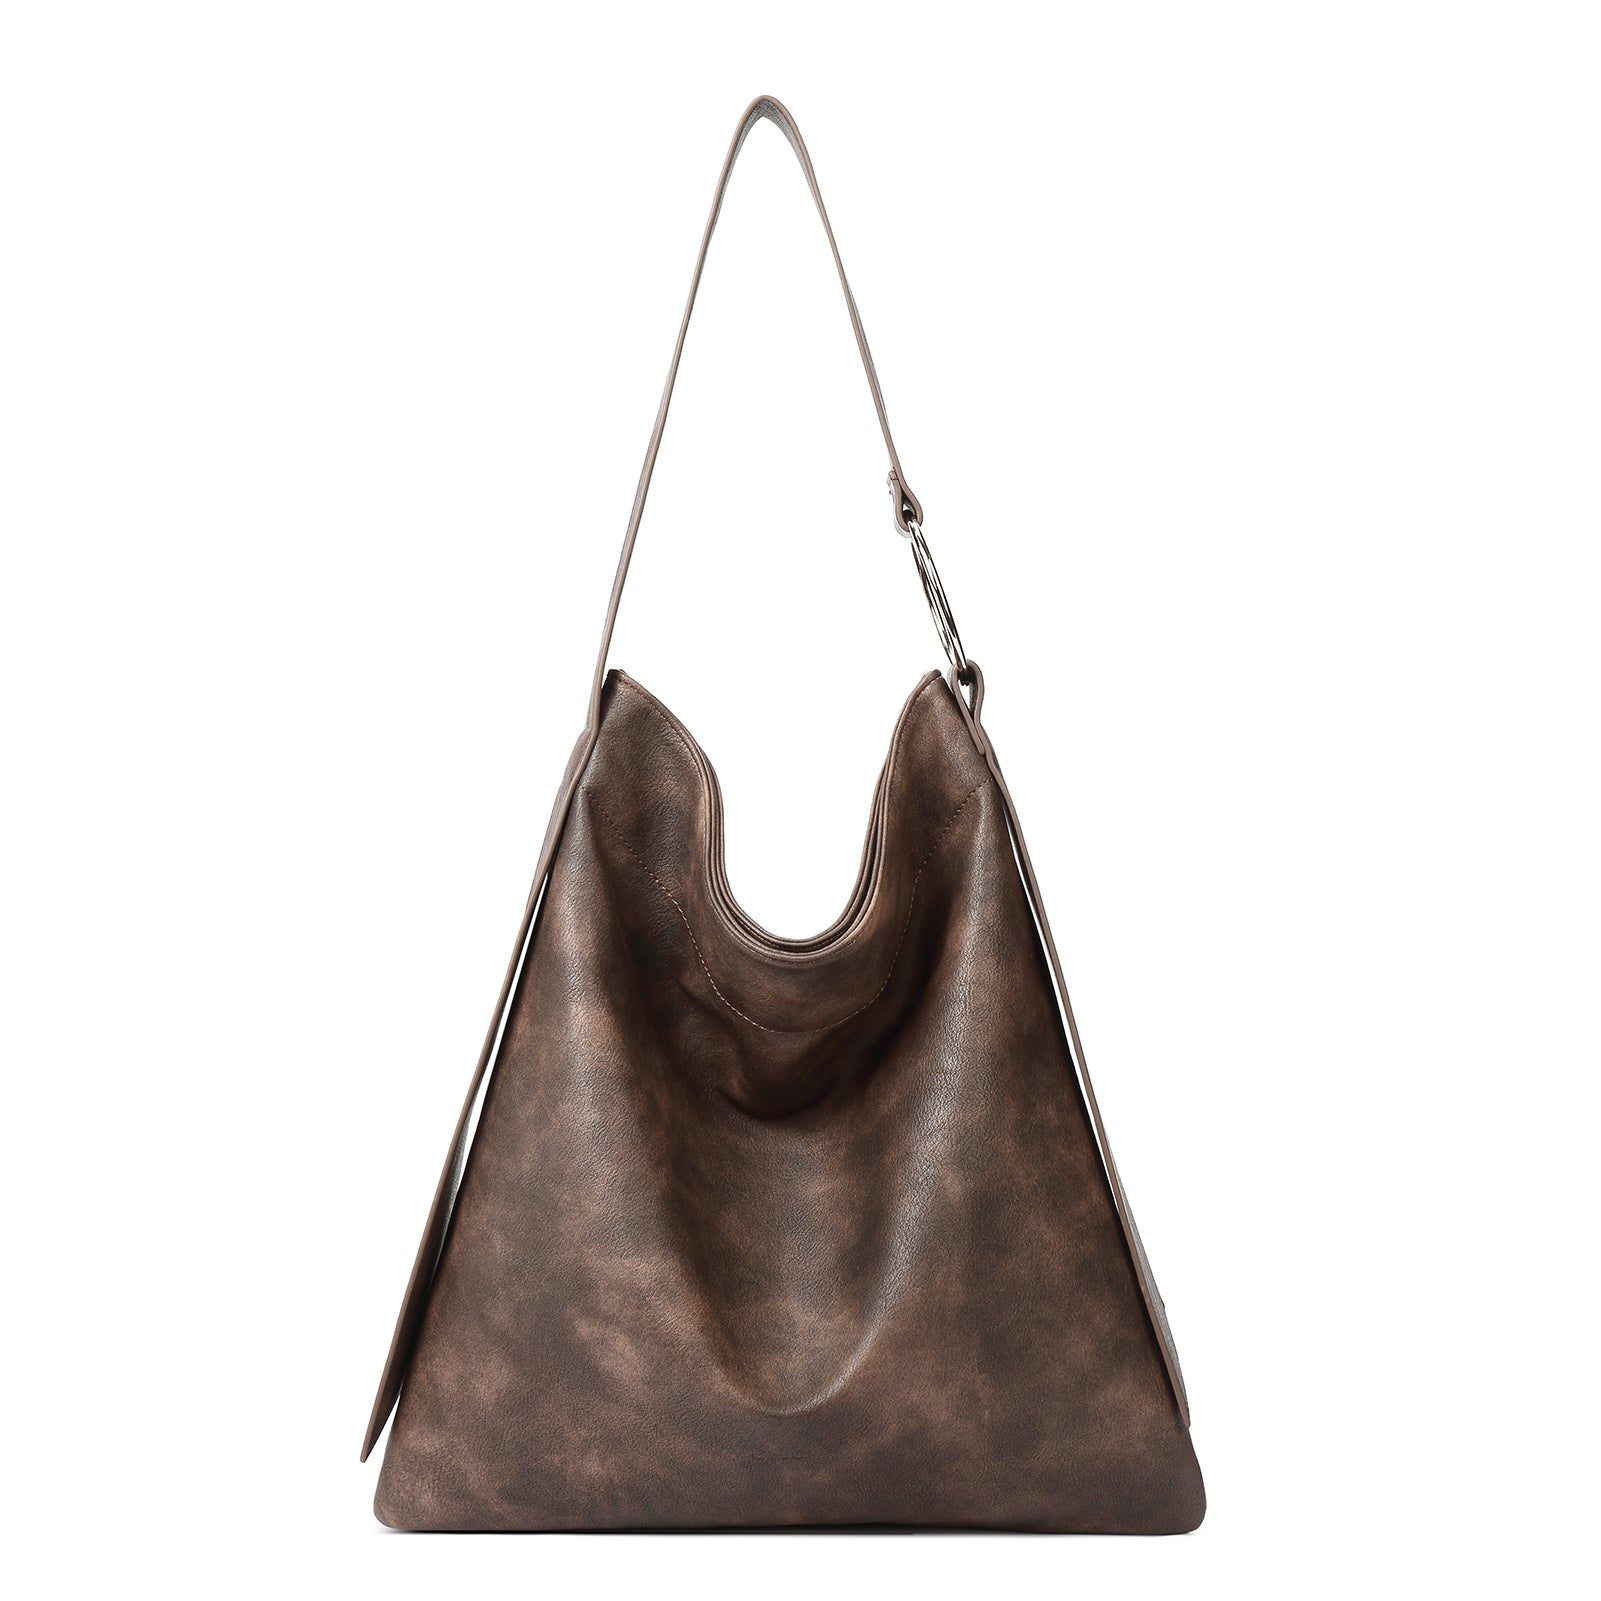 Purses for Women Tote Handbags Vegan Leather Hobo Bags